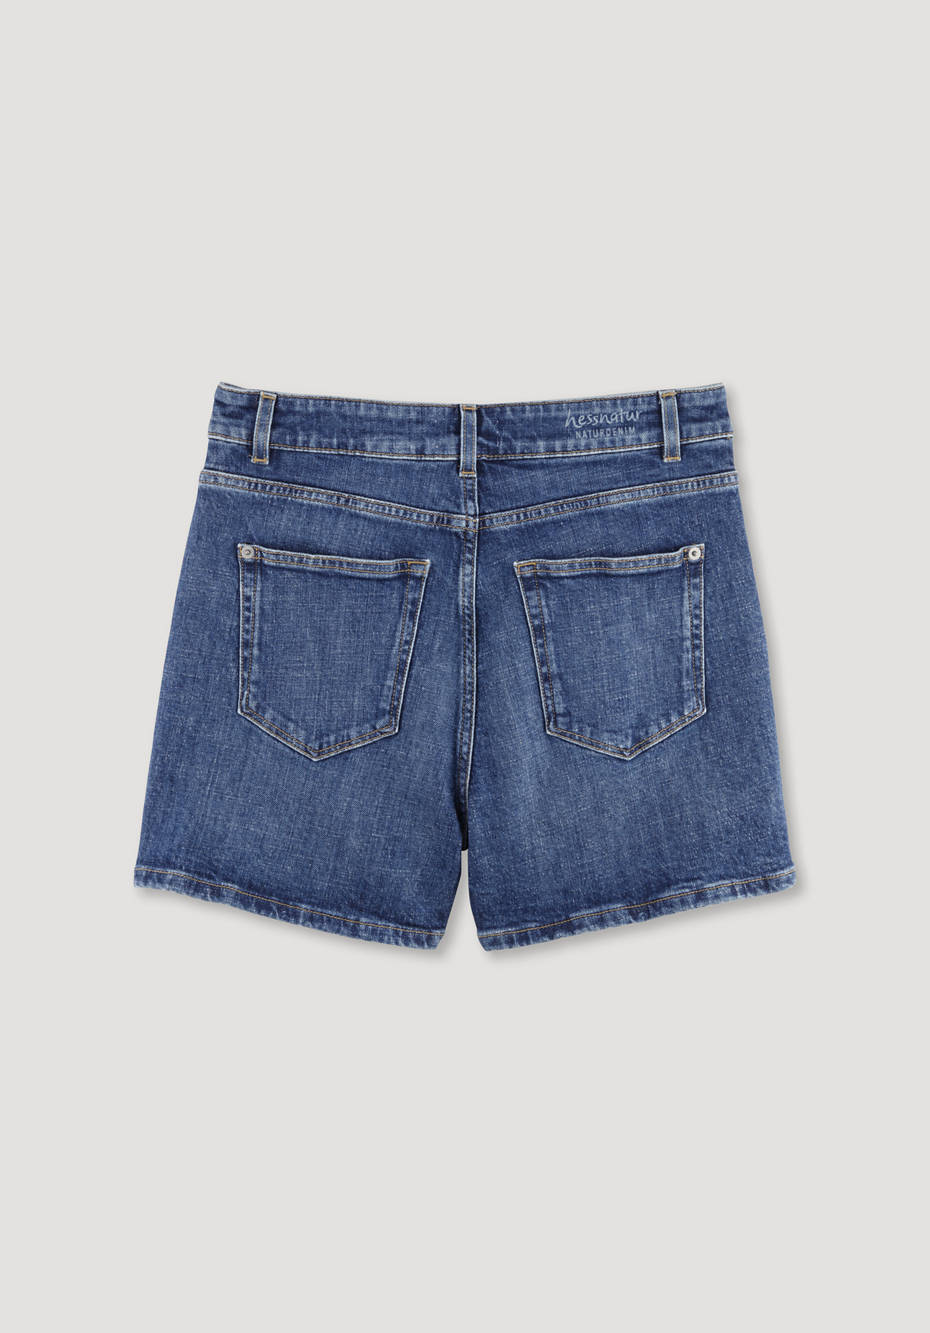 Jean shorts made from organic denim